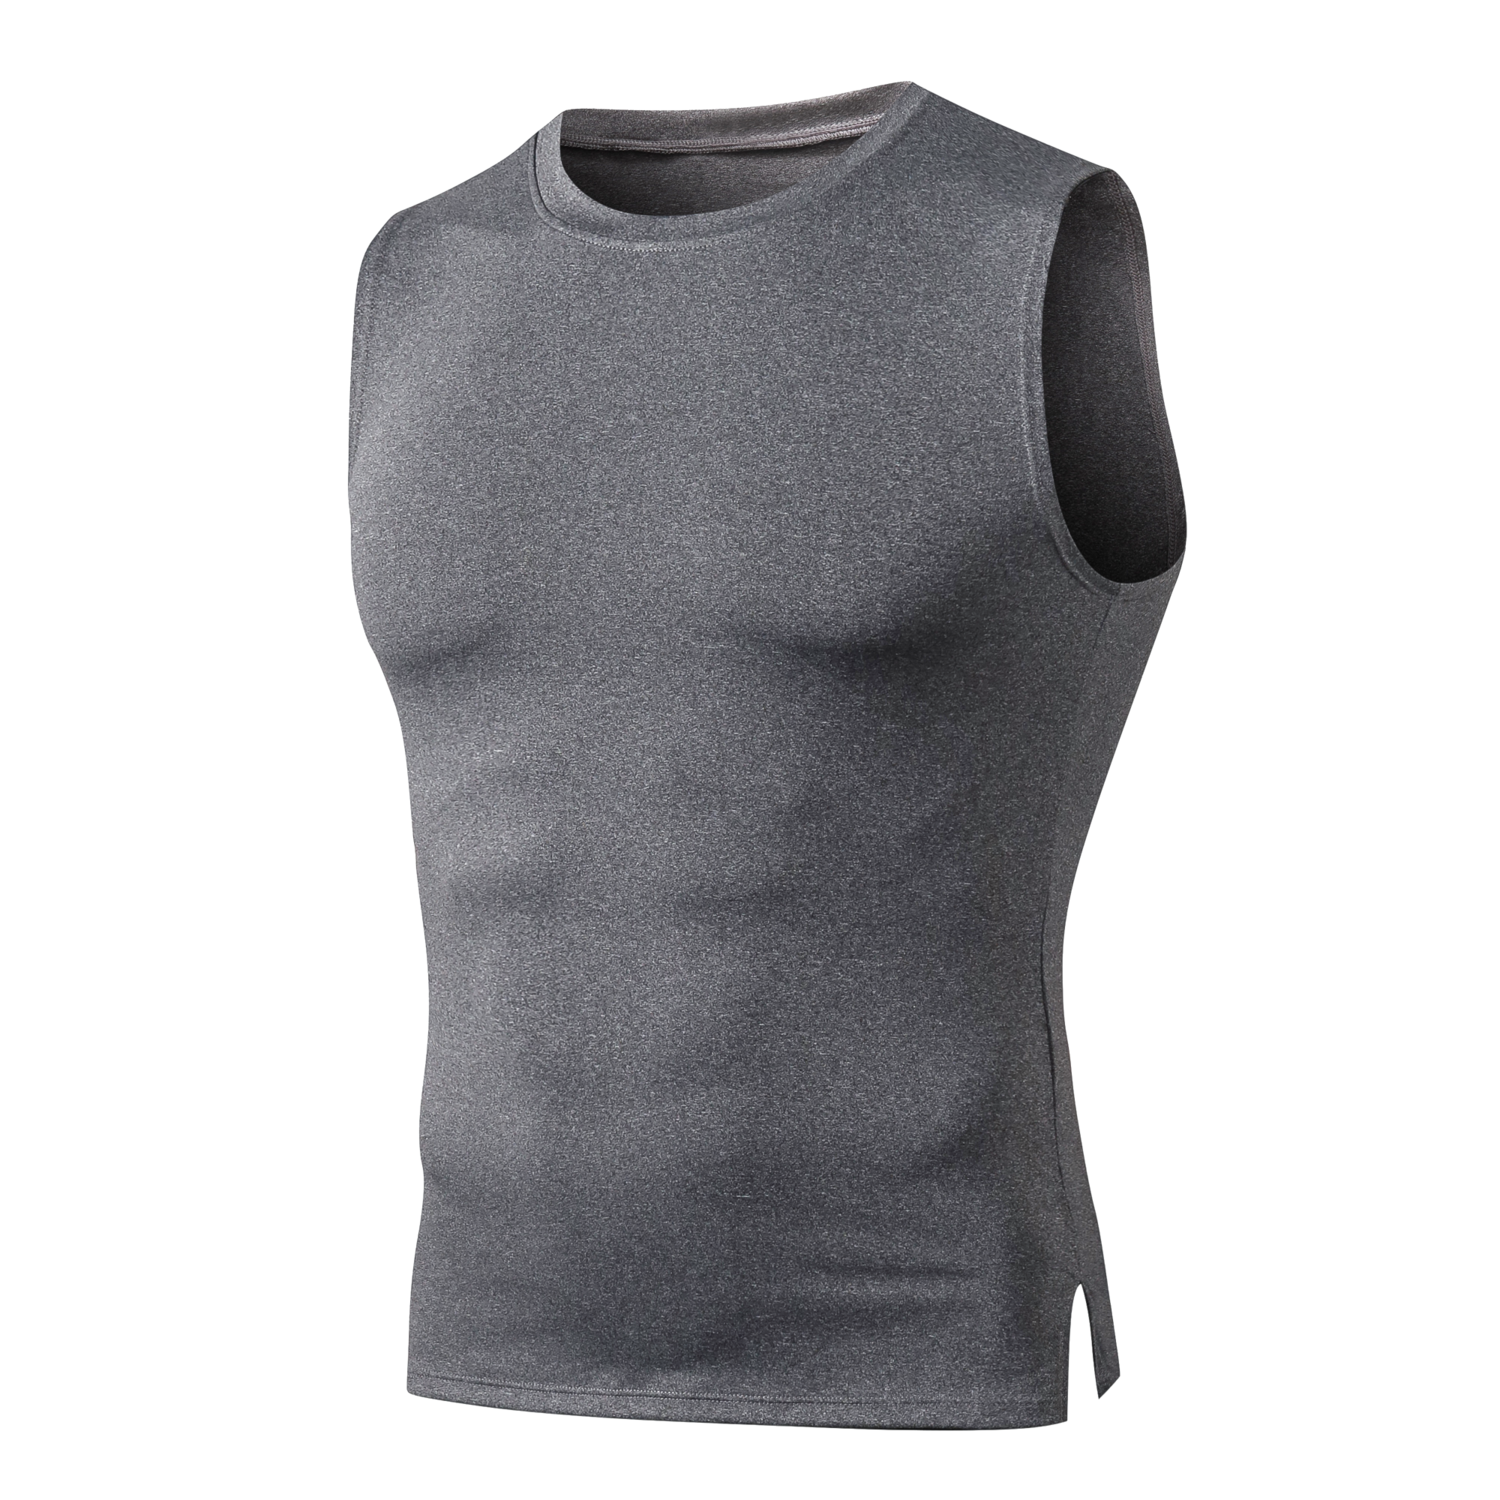 Chinjane Men's Skinny Tight Gray Compression Base Layer Sleeveless T-Shirt